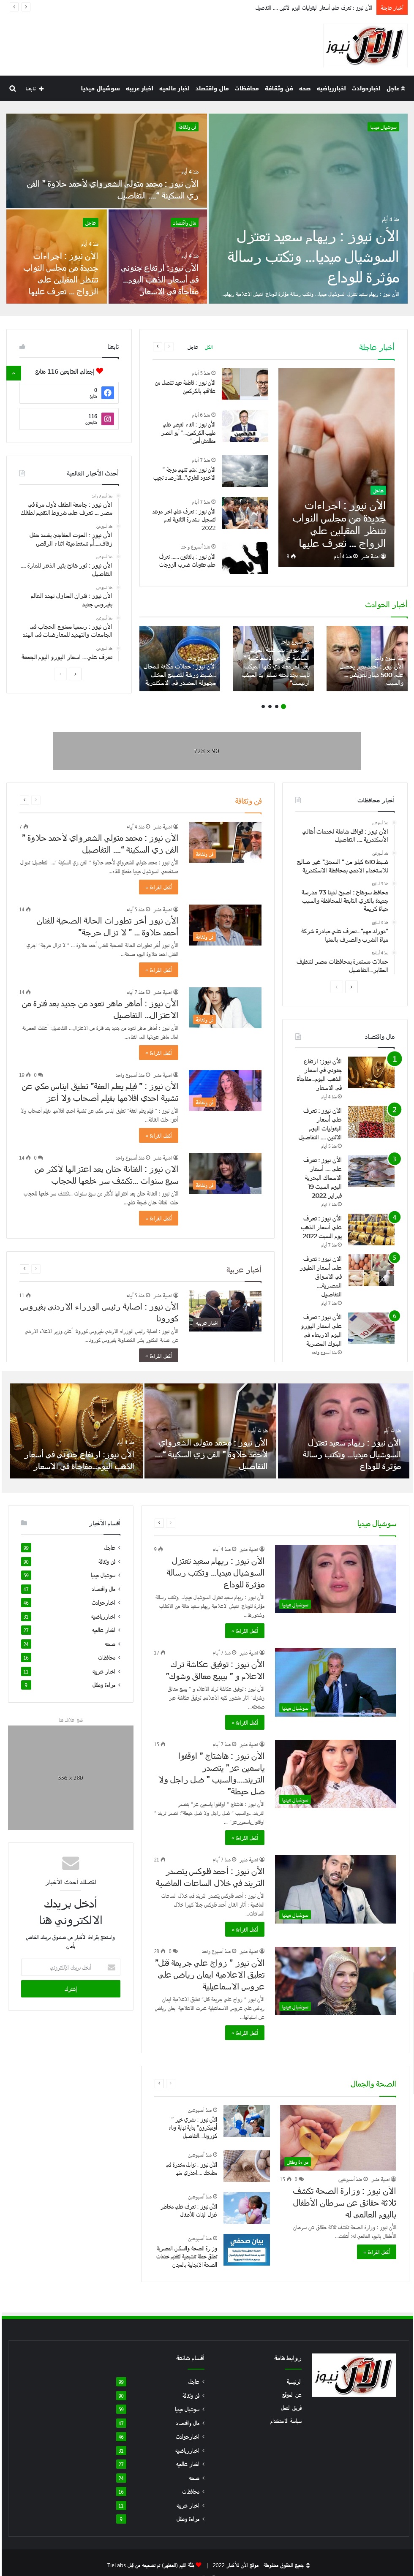 Alaan News Portal